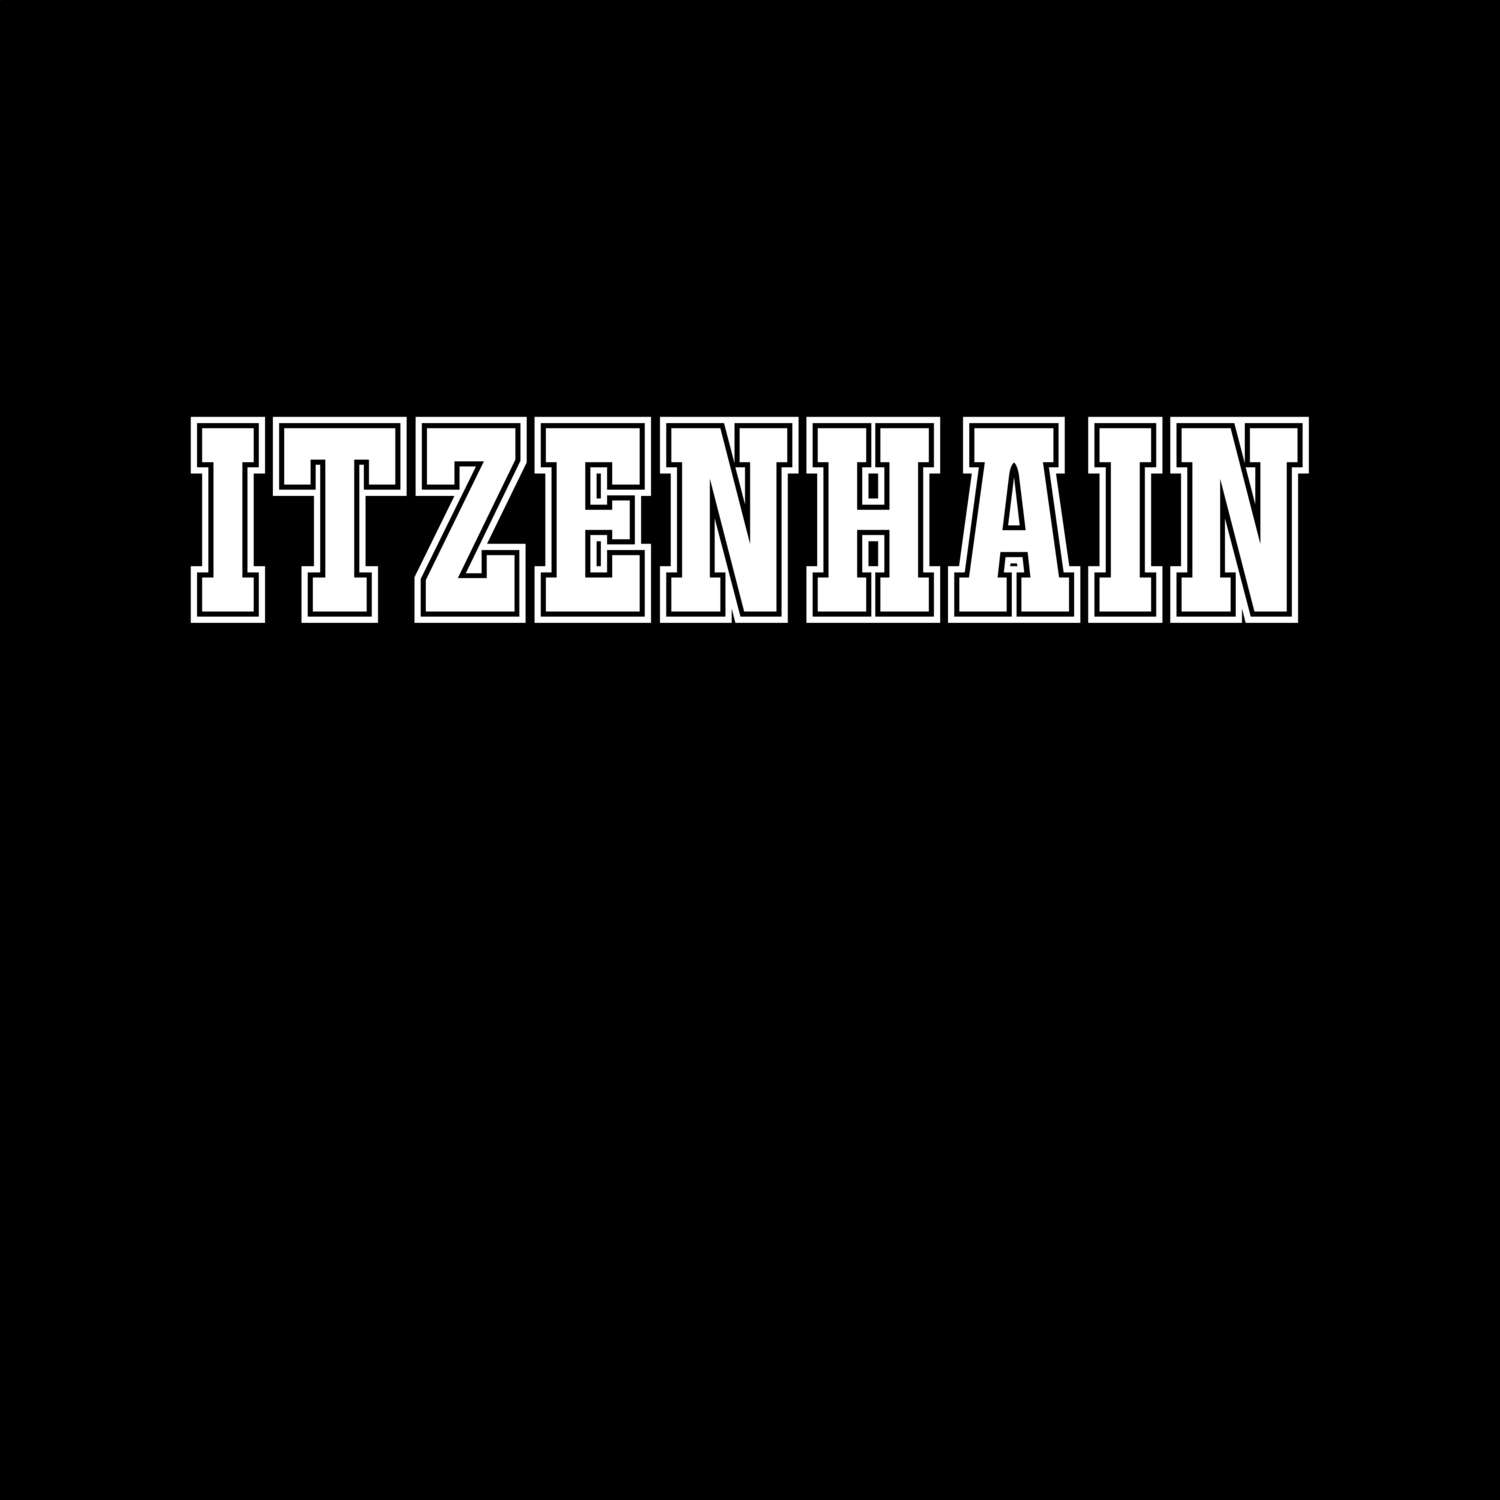 Itzenhain T-Shirt »Classic«